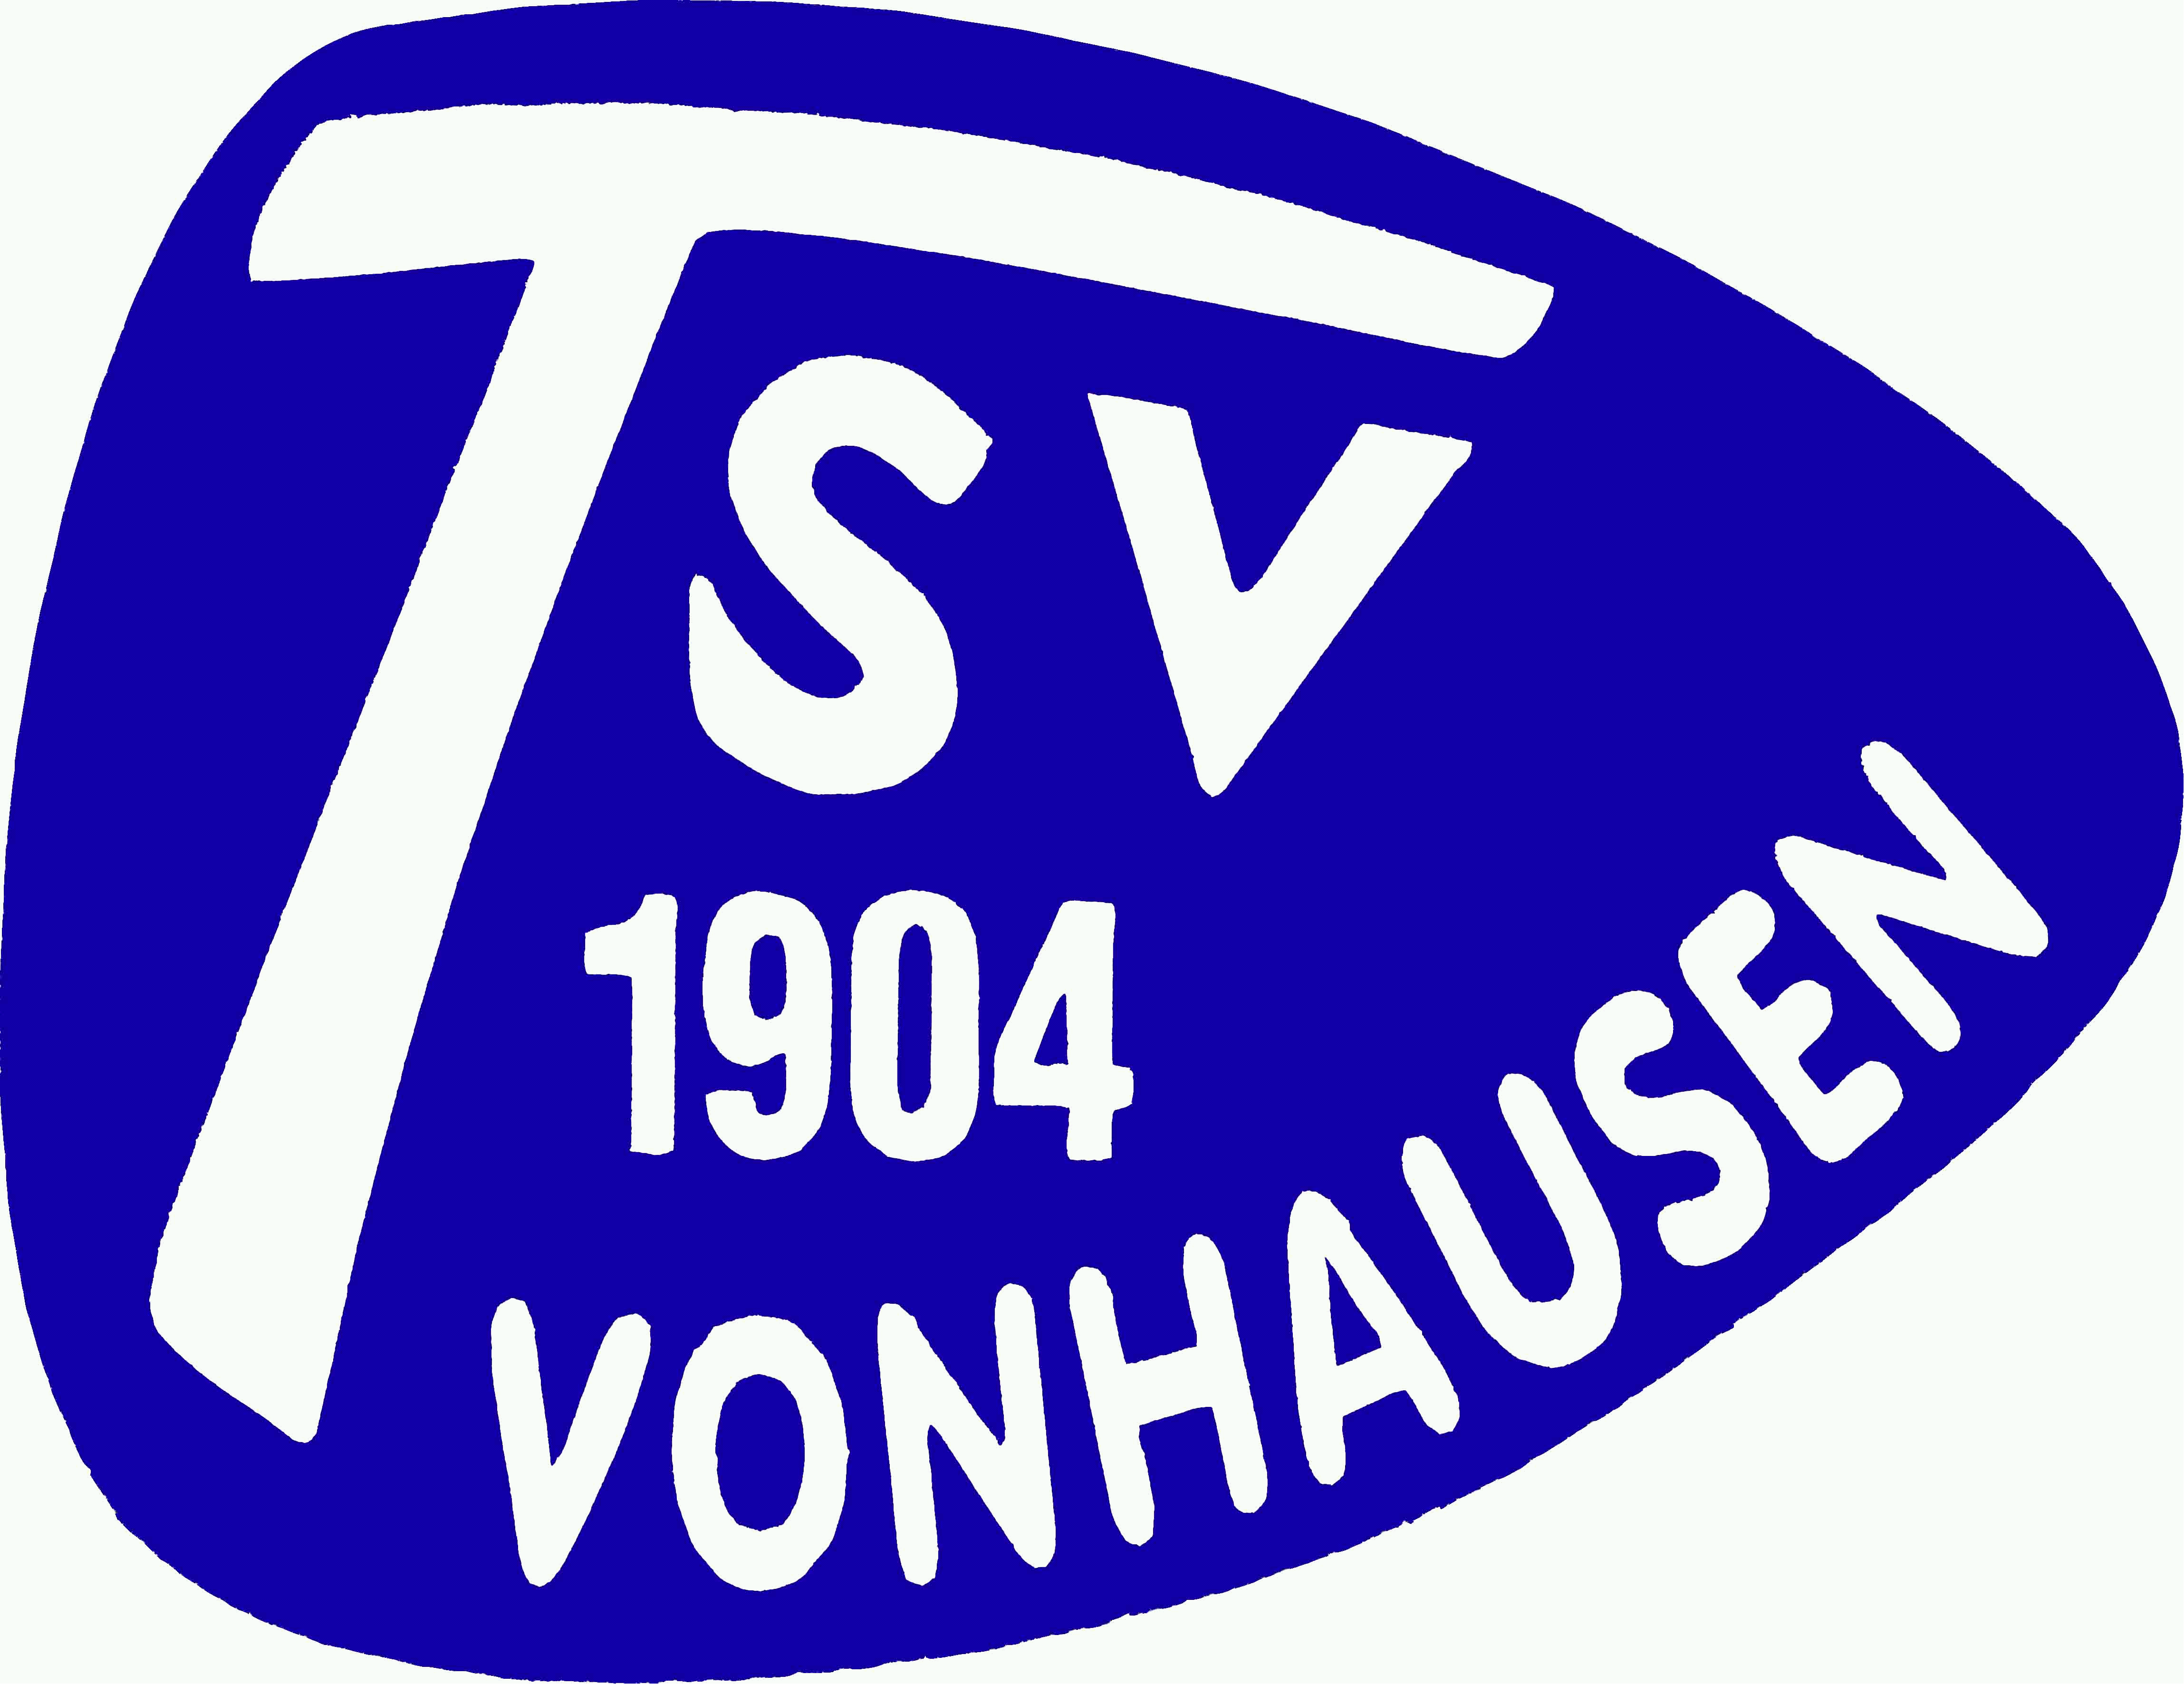 (c) Tsv-vonhausen.de